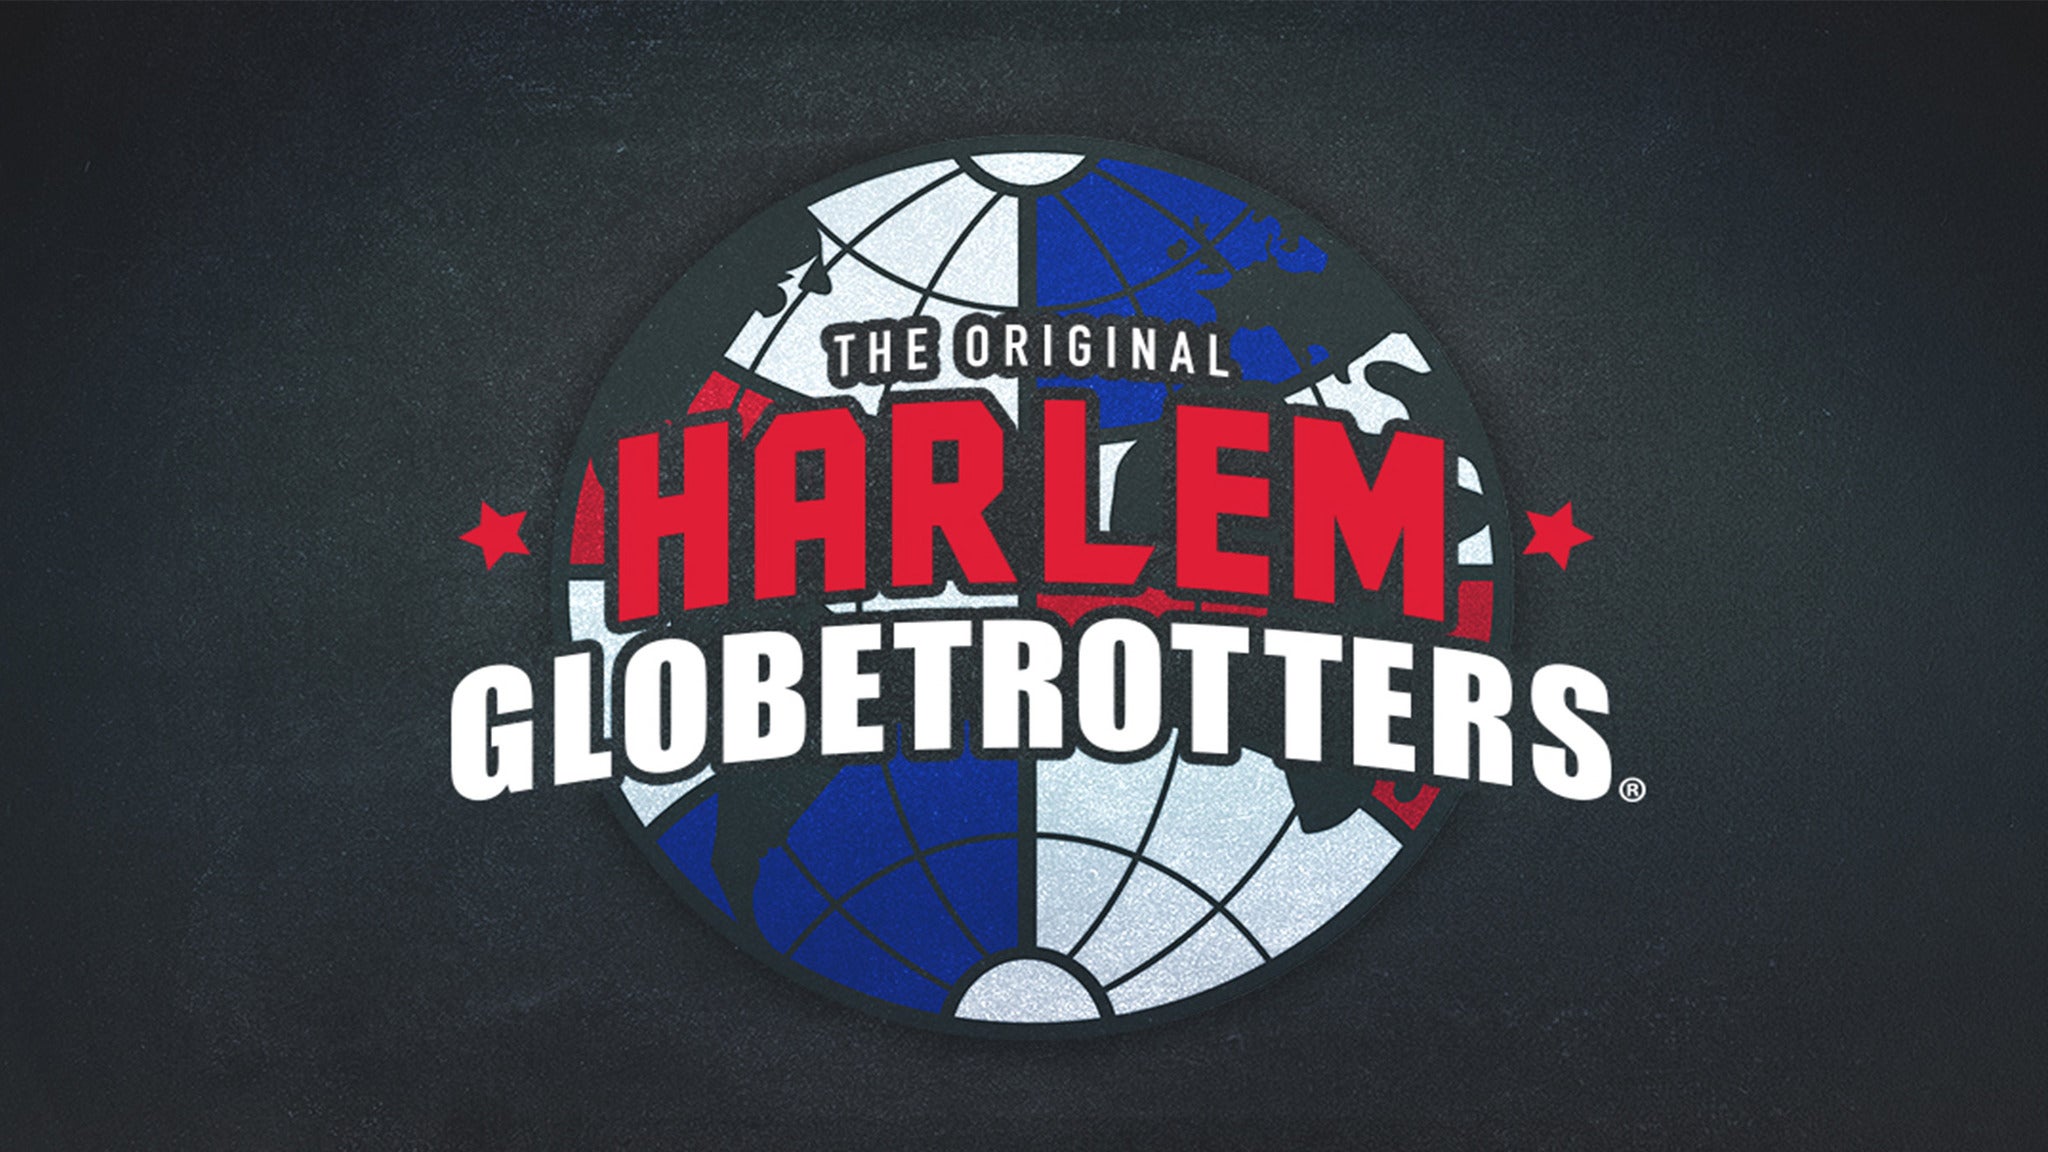 Harlem Globetrotters World Tour pre-sale code for legit tickets in Tulsa